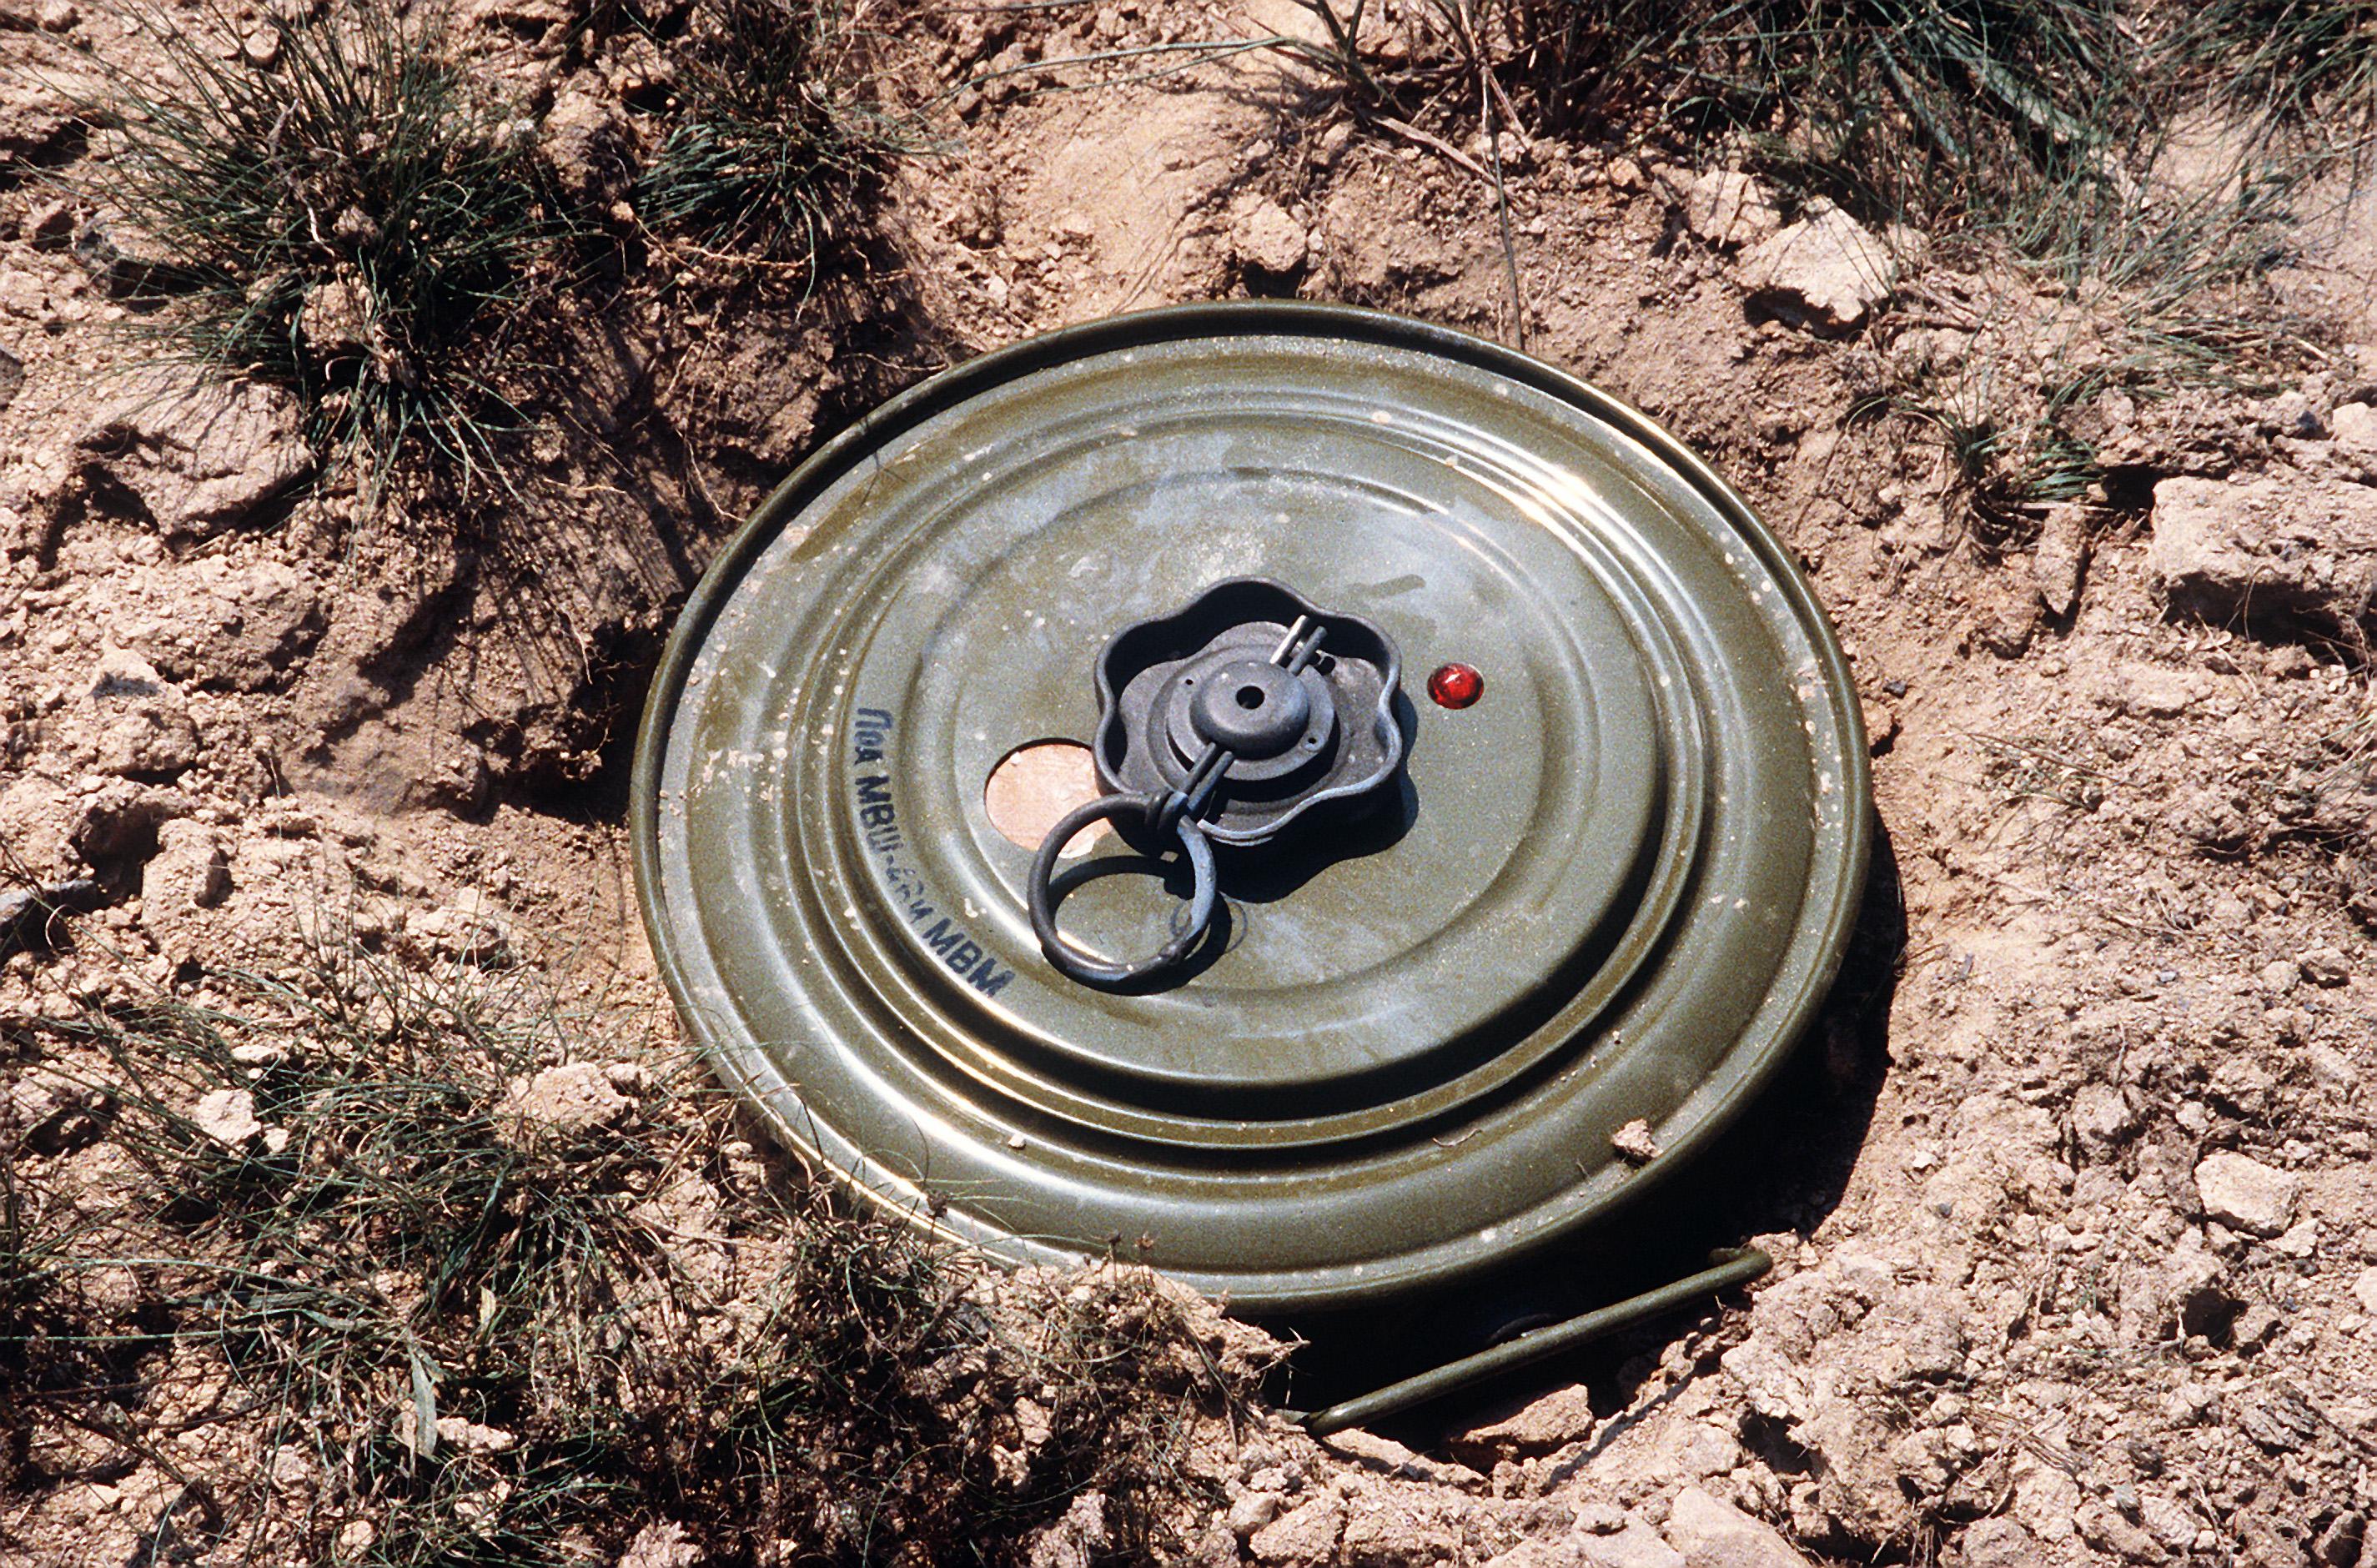 One mine explosion occurred in Azerbaijan in February